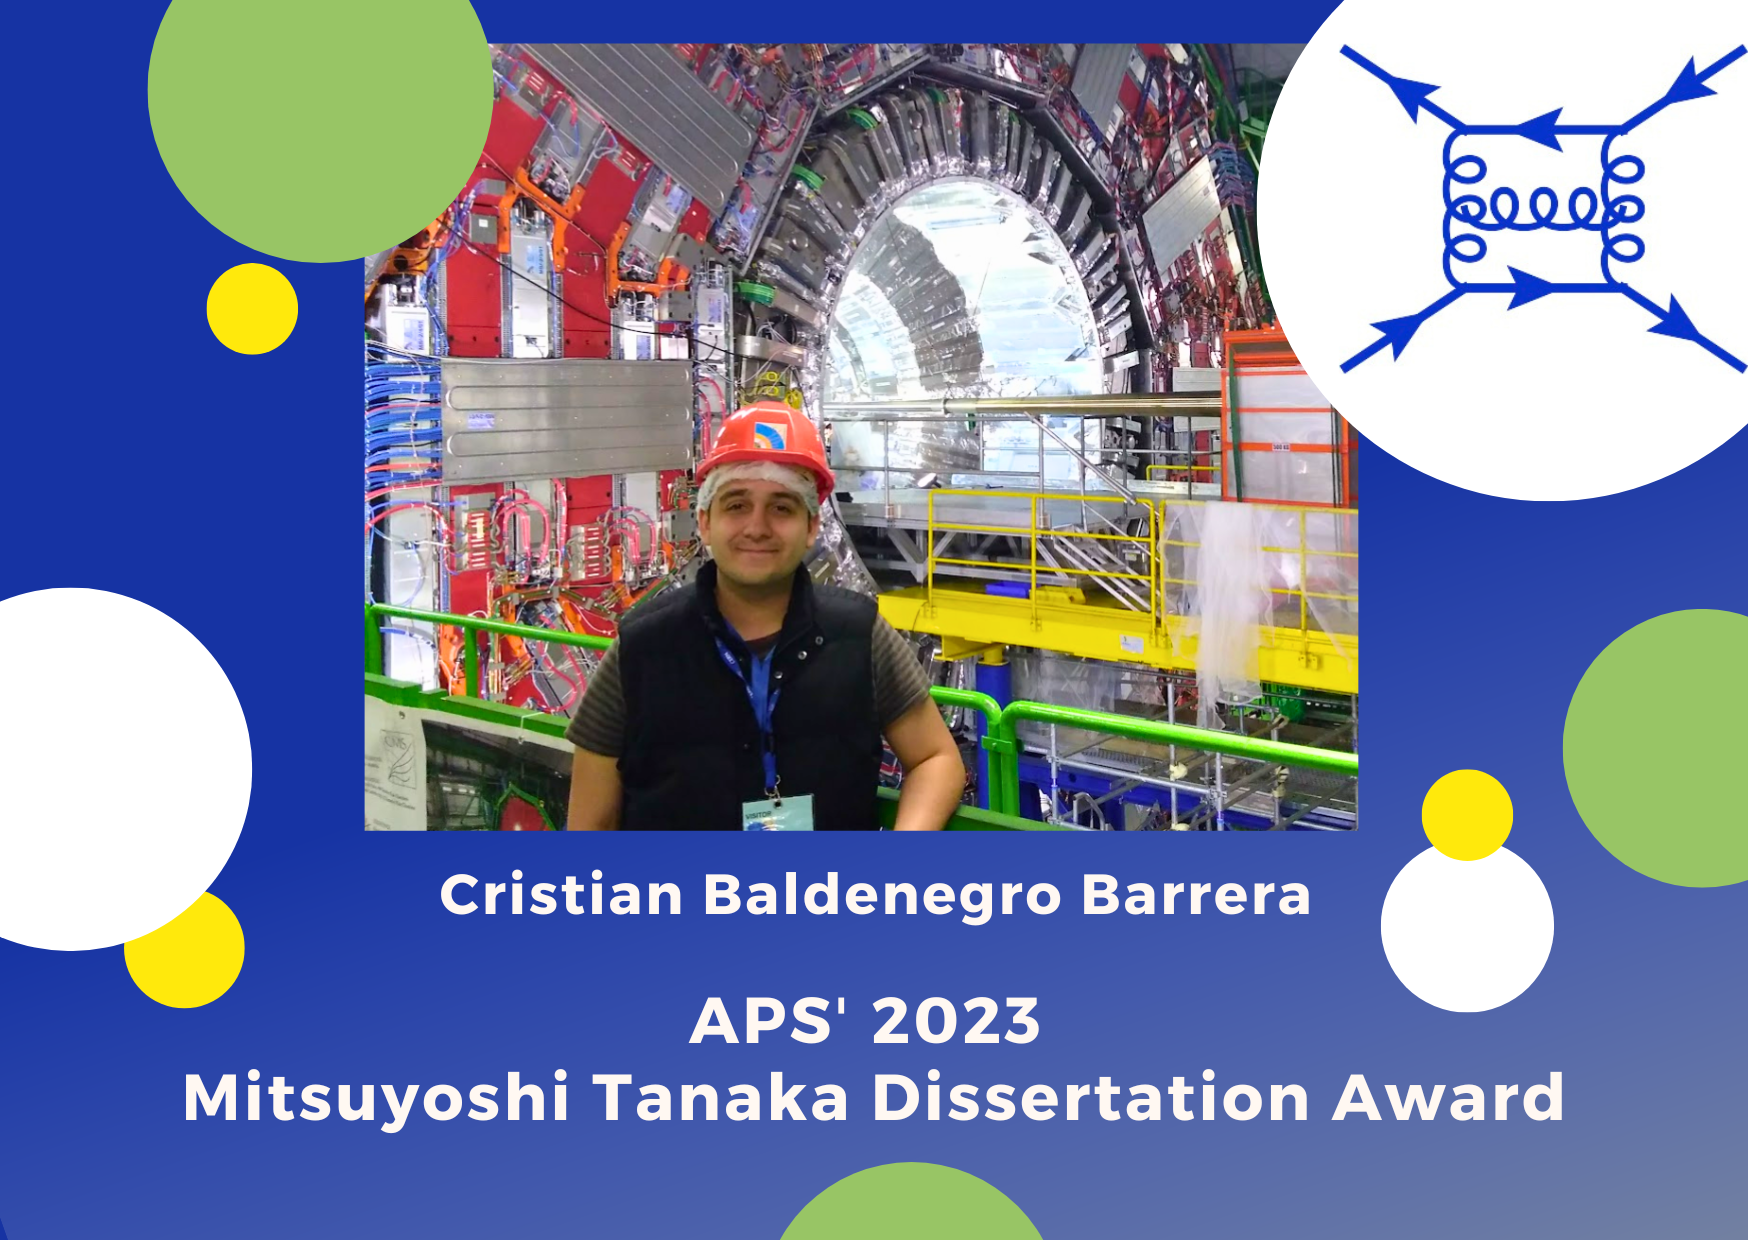 Cristian Baldenegro Barrera, APS’ 2023 Mitsuyoshi Tanaka Dissertation Award winner